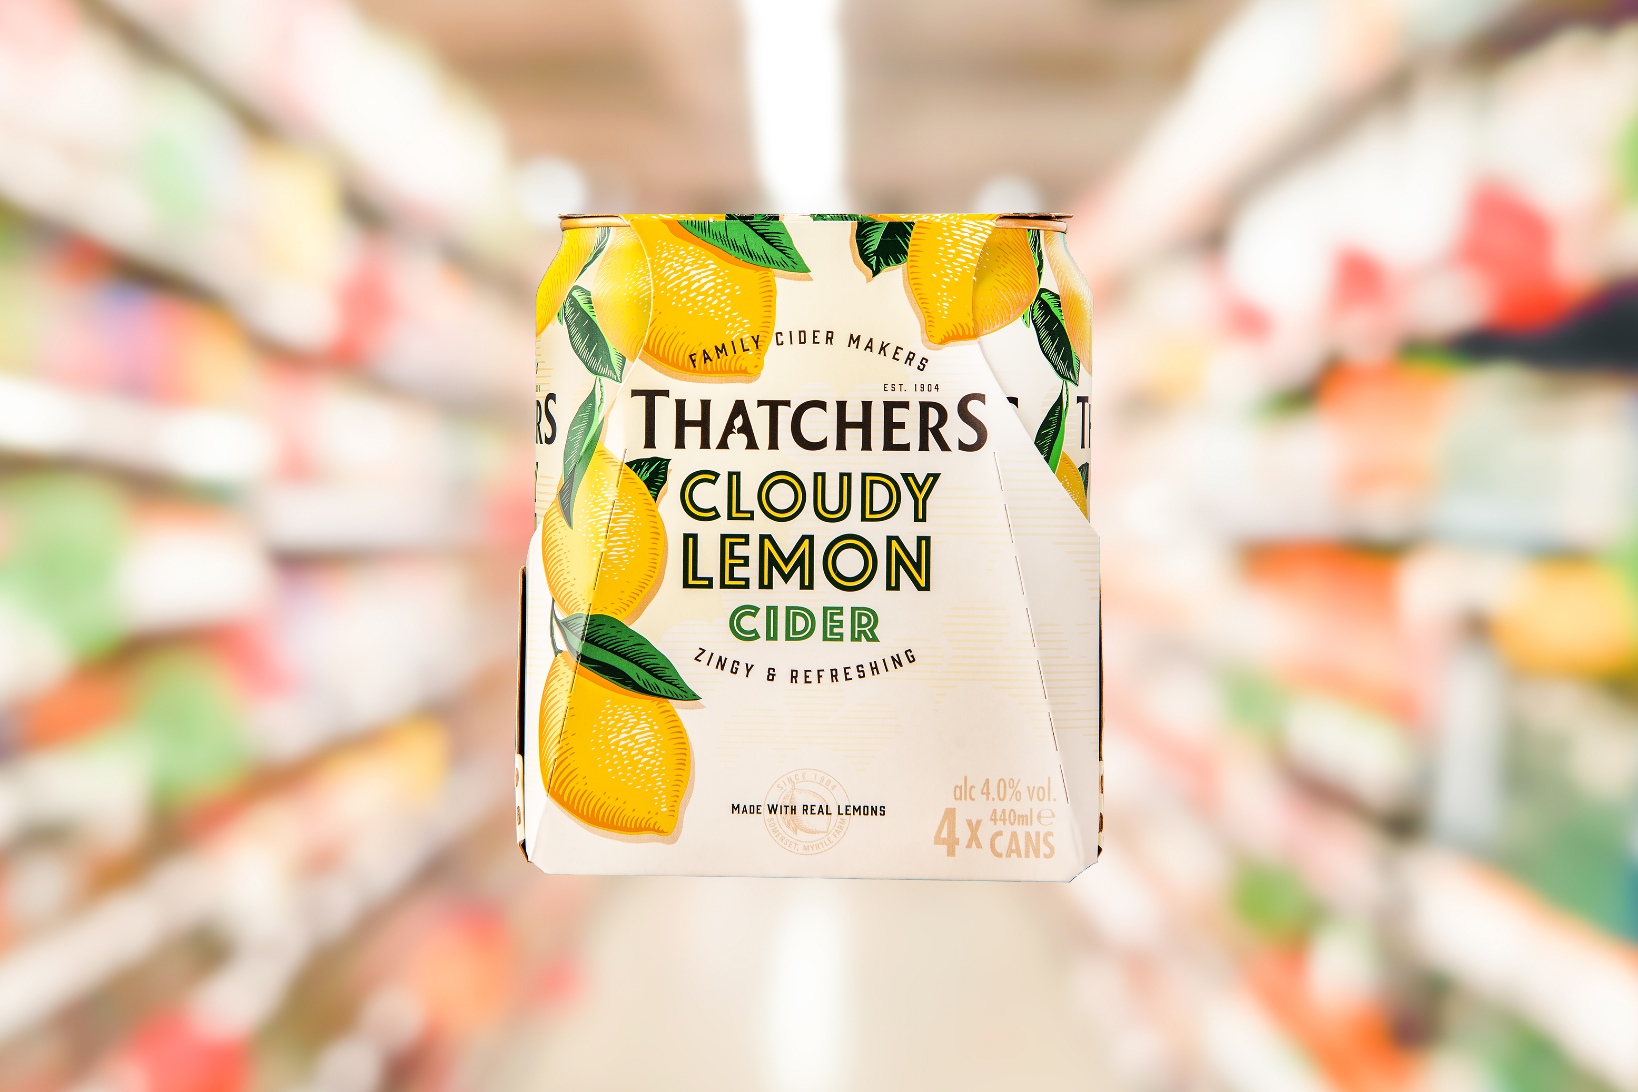 Thatchers-cloudy-lemon-cider.jpg